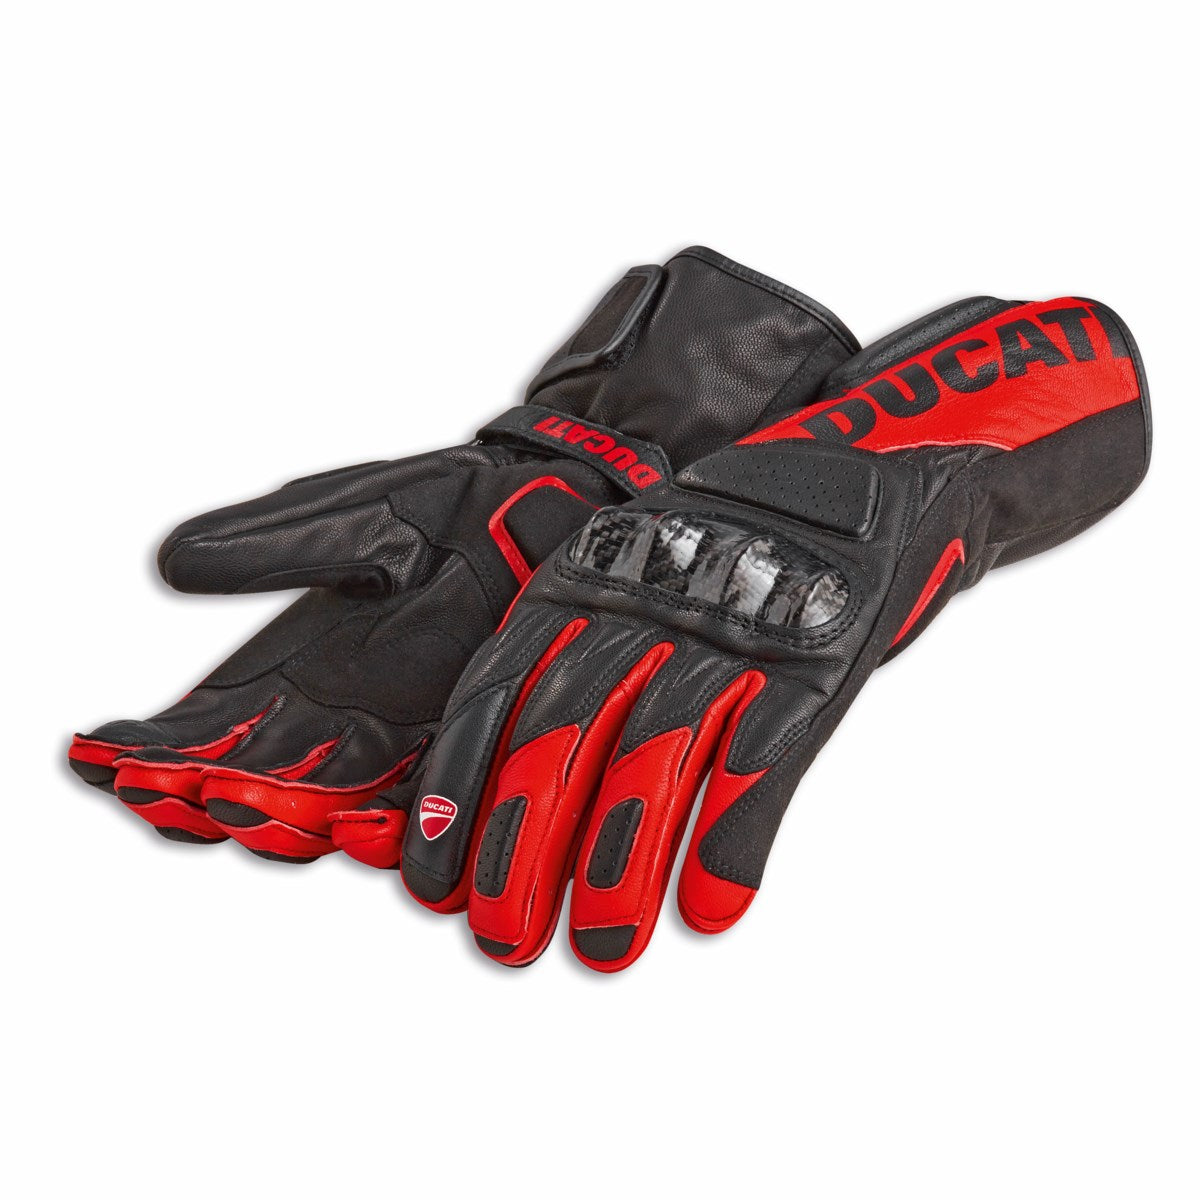 Ducati Performance C3 Gloves